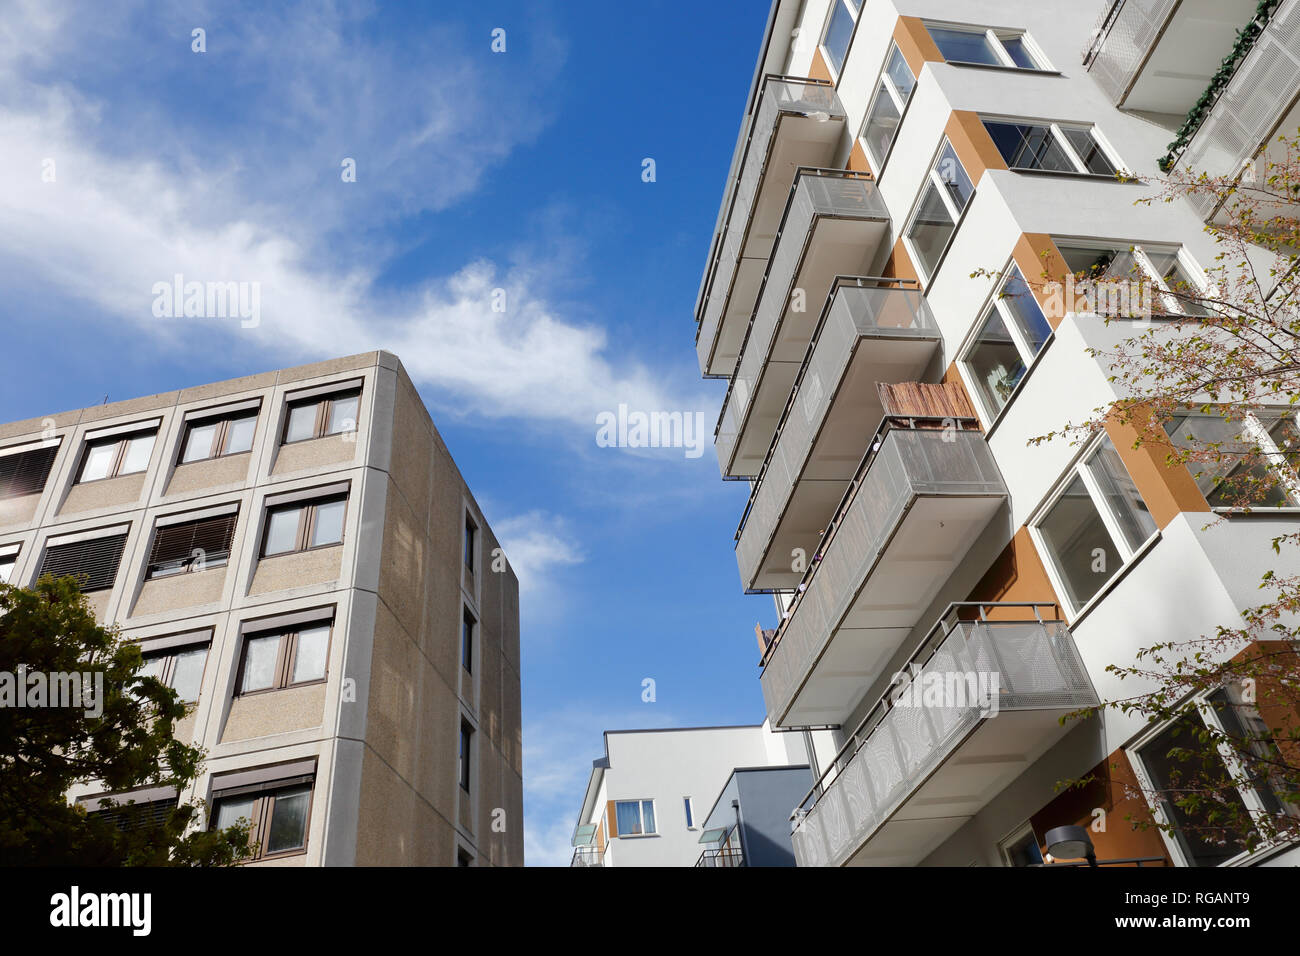 Multi-stories residential buildings Stock Photo